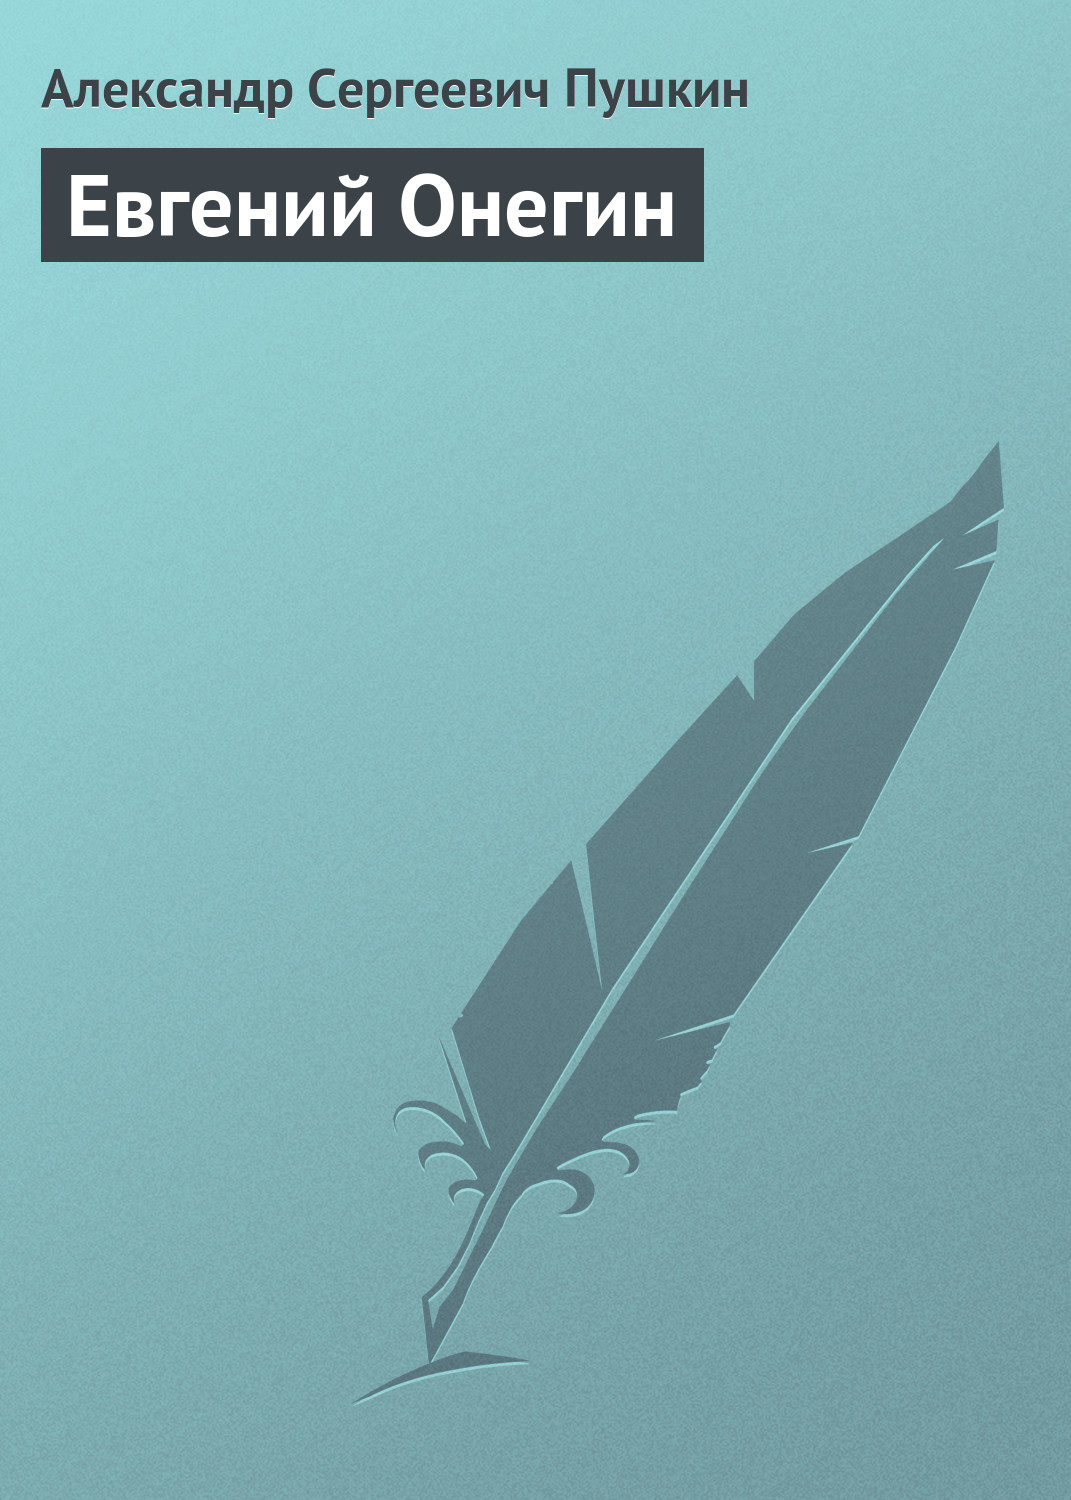 Скачать электронную книгу бесплатно евгений онегин пушкин